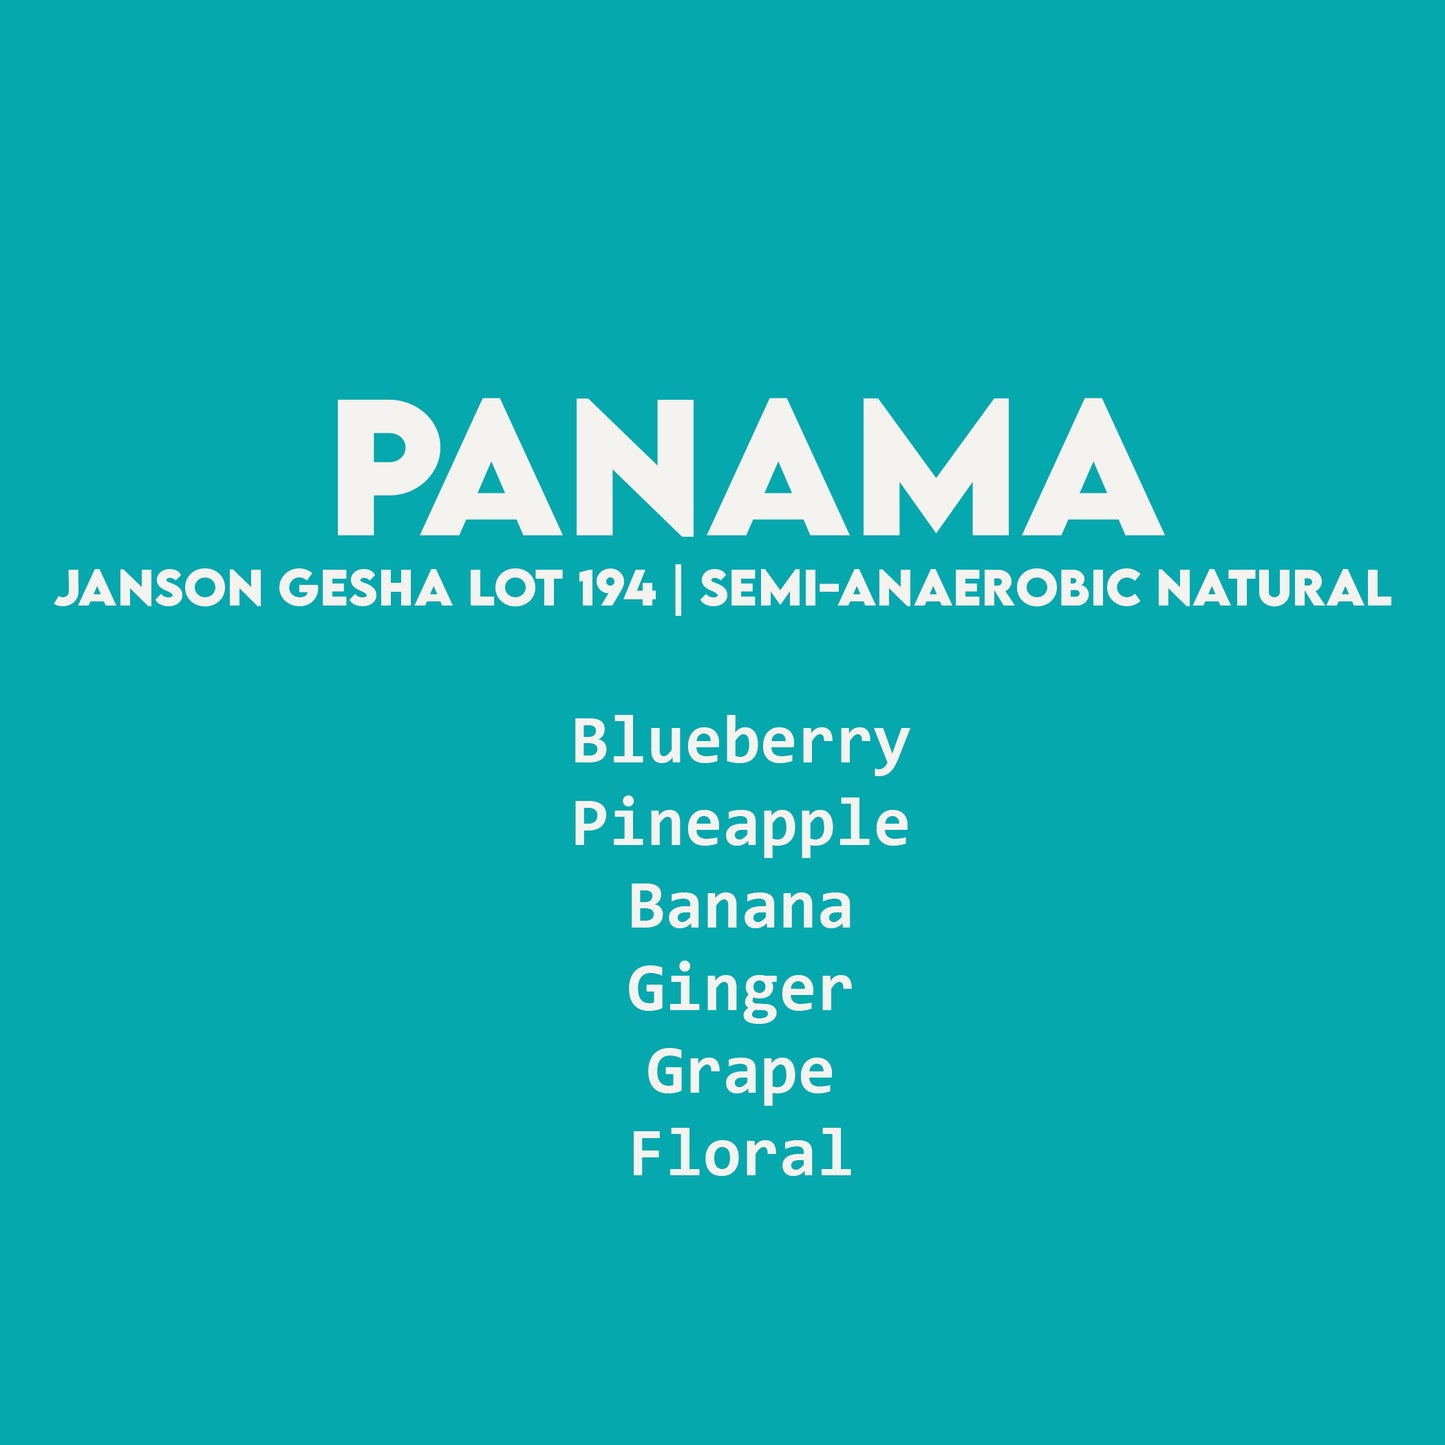 Panama - Janson Gesha Lot 194 | Semi-Anaerobic Natural - 100g